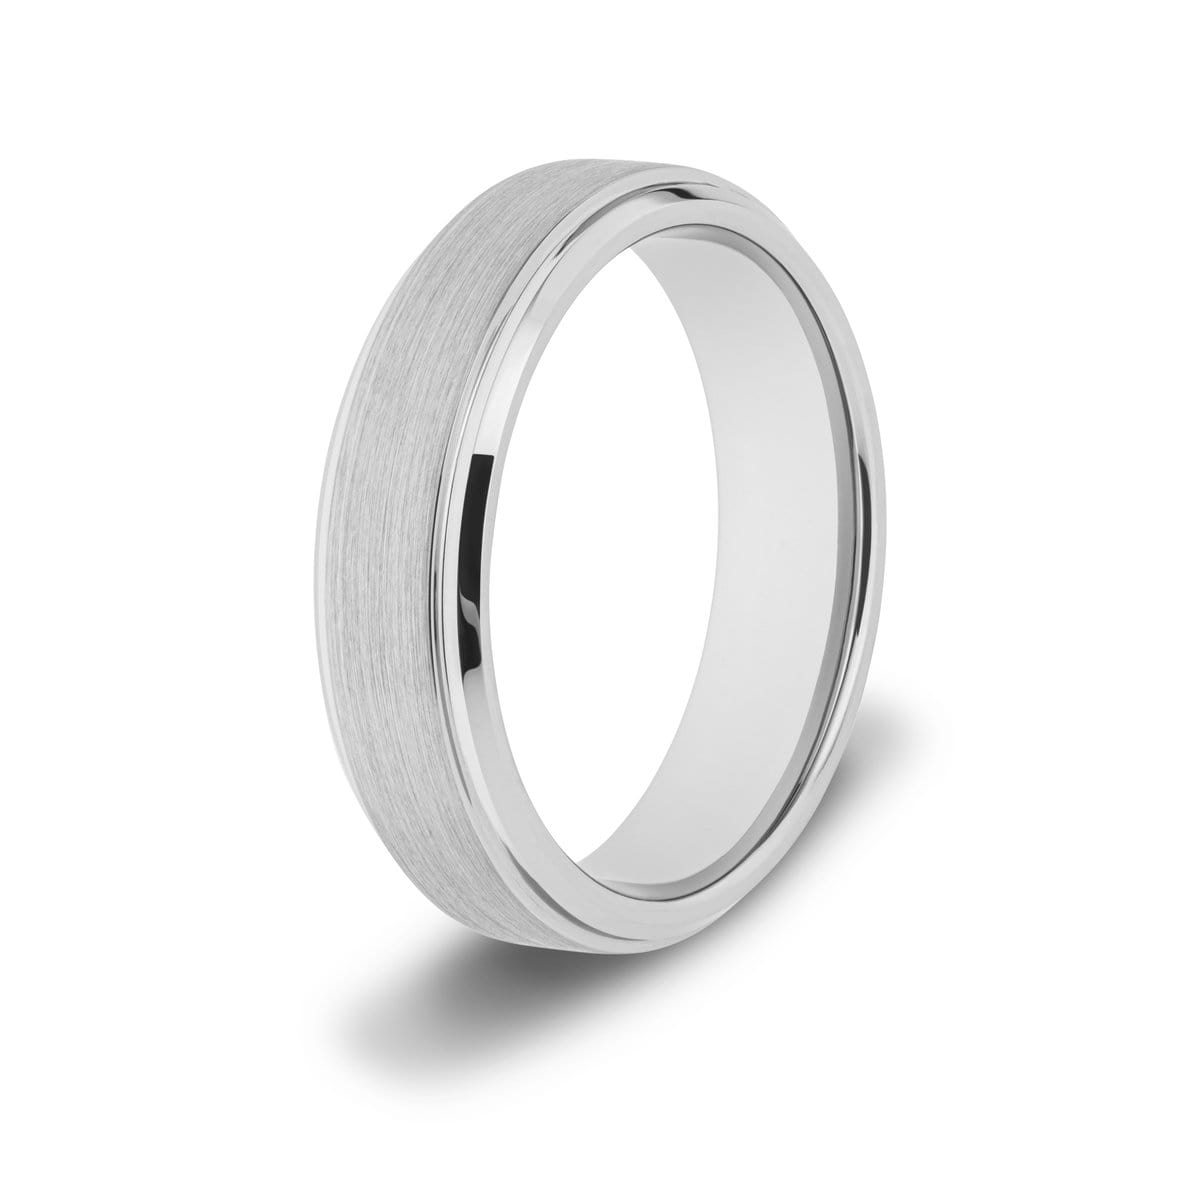 Goth ring men-Statement ring-Chunky ring men-Big ring-Plain thick silver  ring - Shop Majade Jewelry Design General Rings - Pinkoi